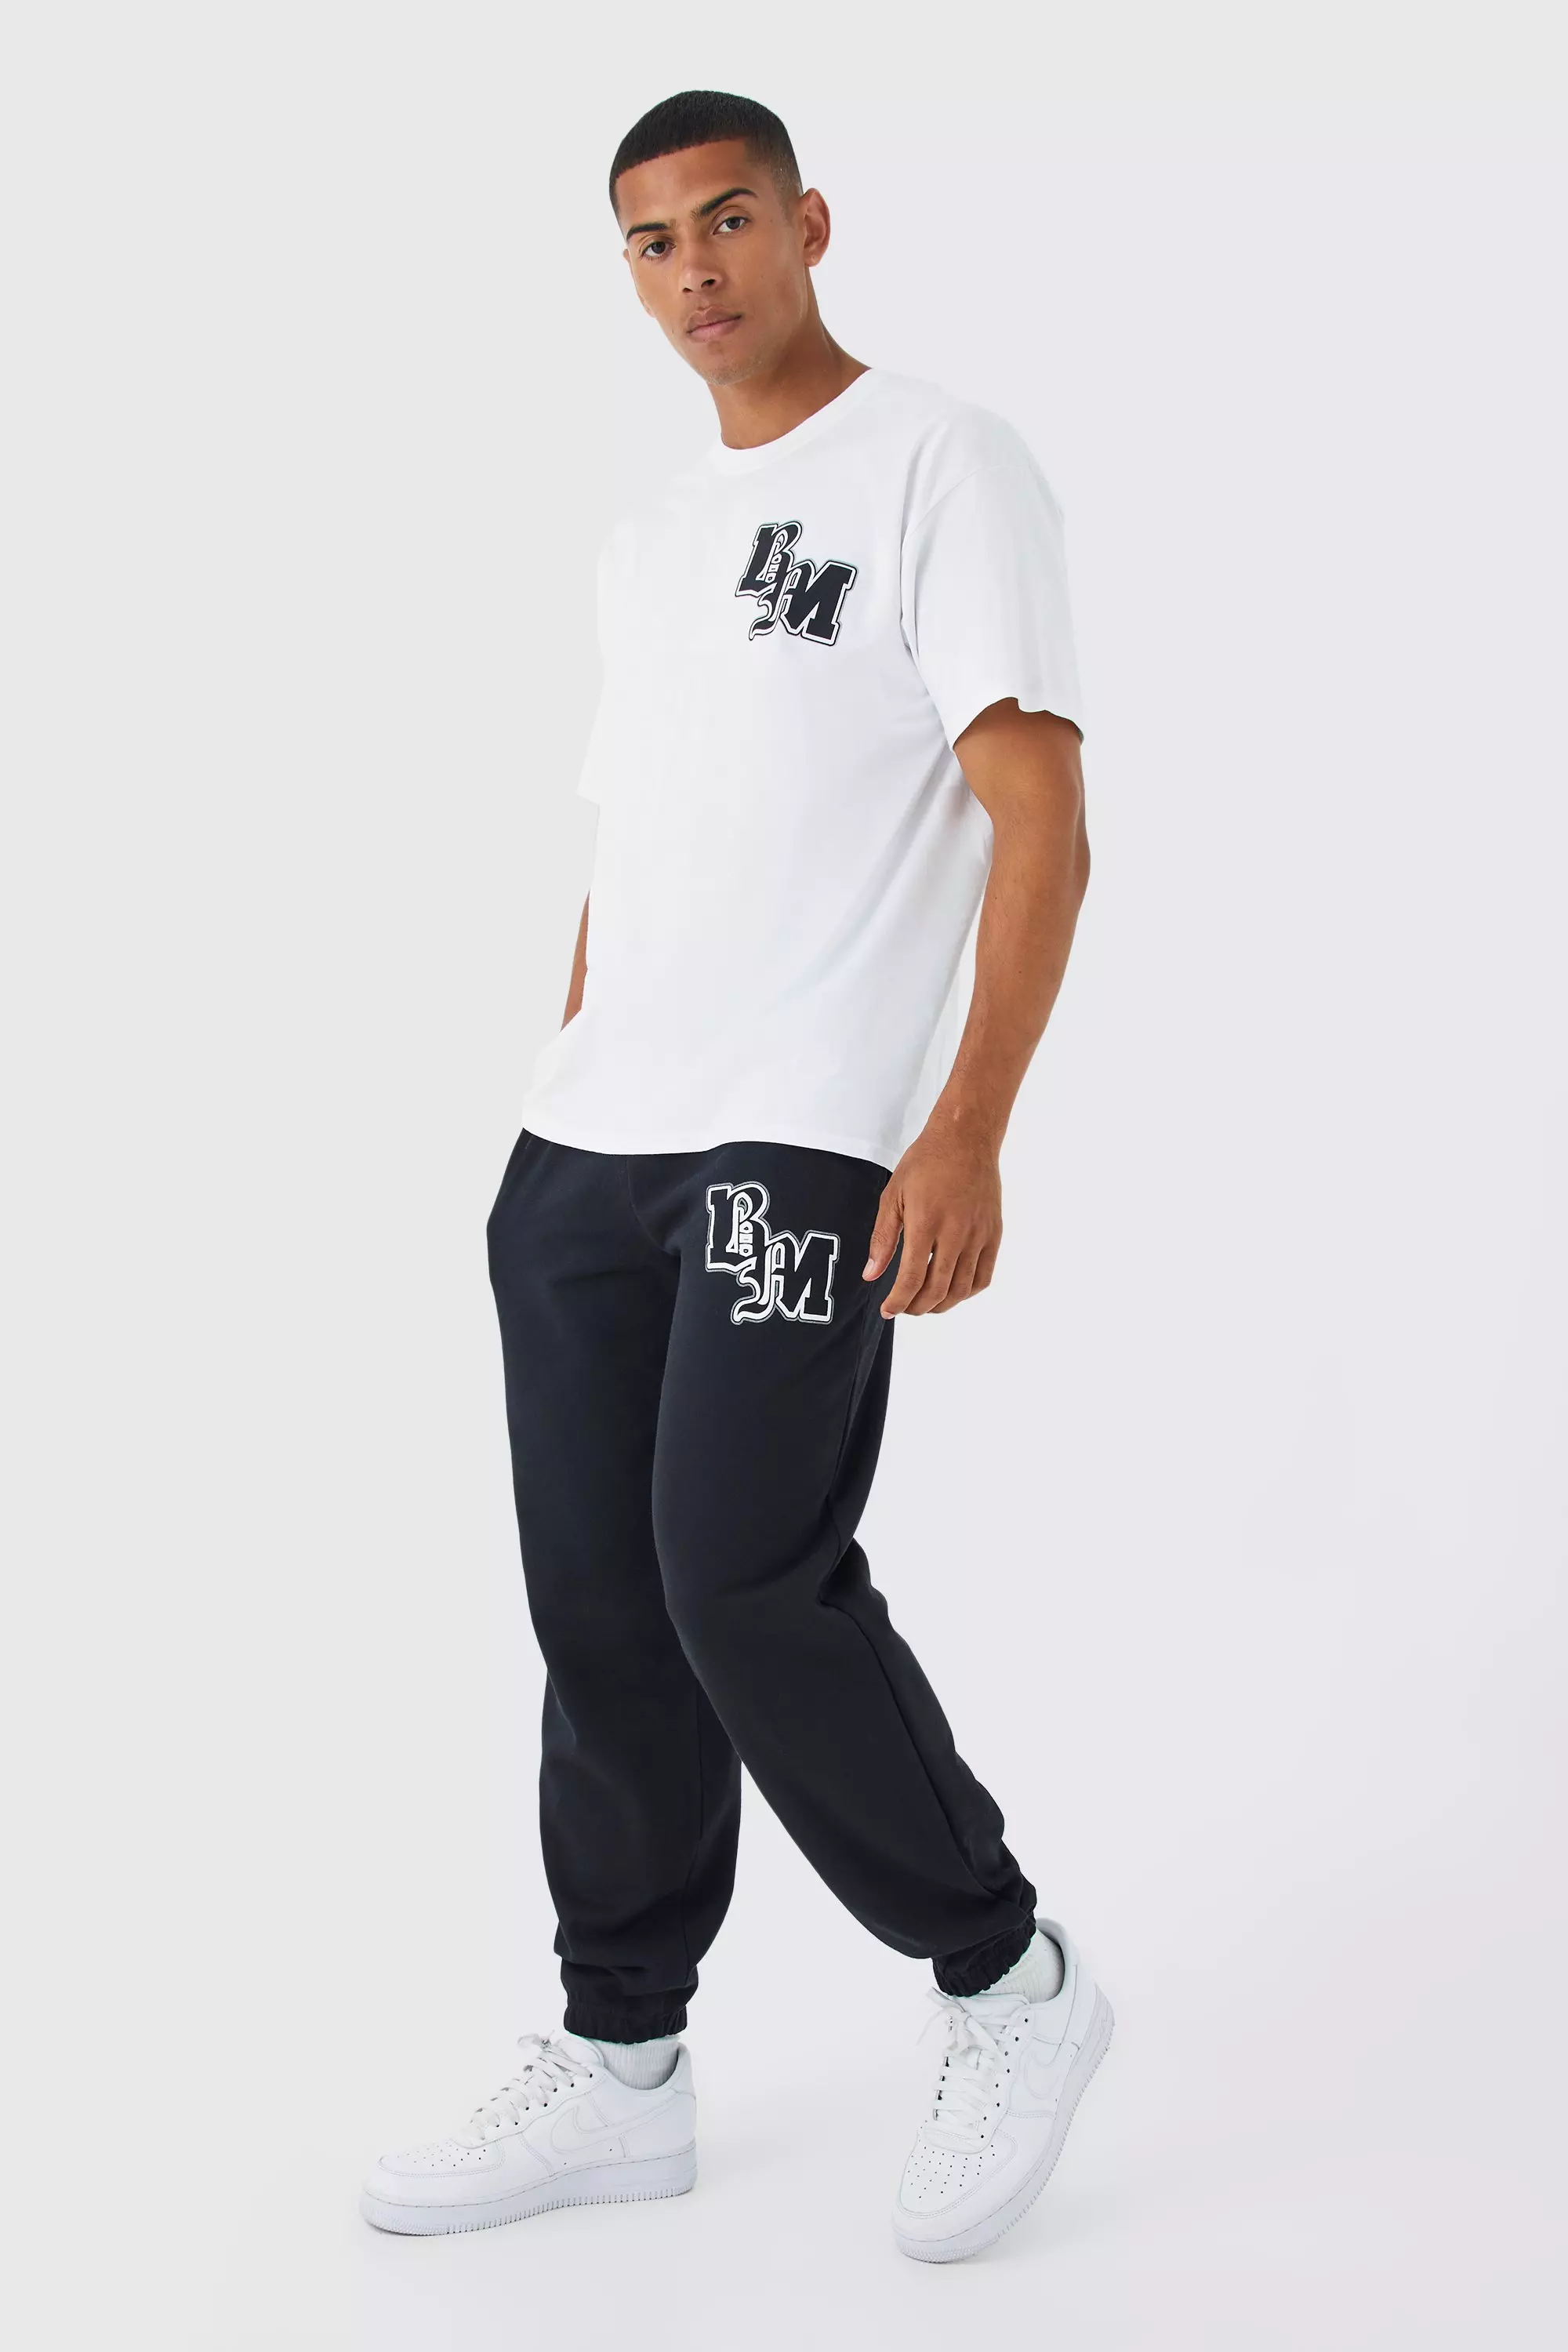 Oversized Bm Graphic Tee & Sweatpants Set Black